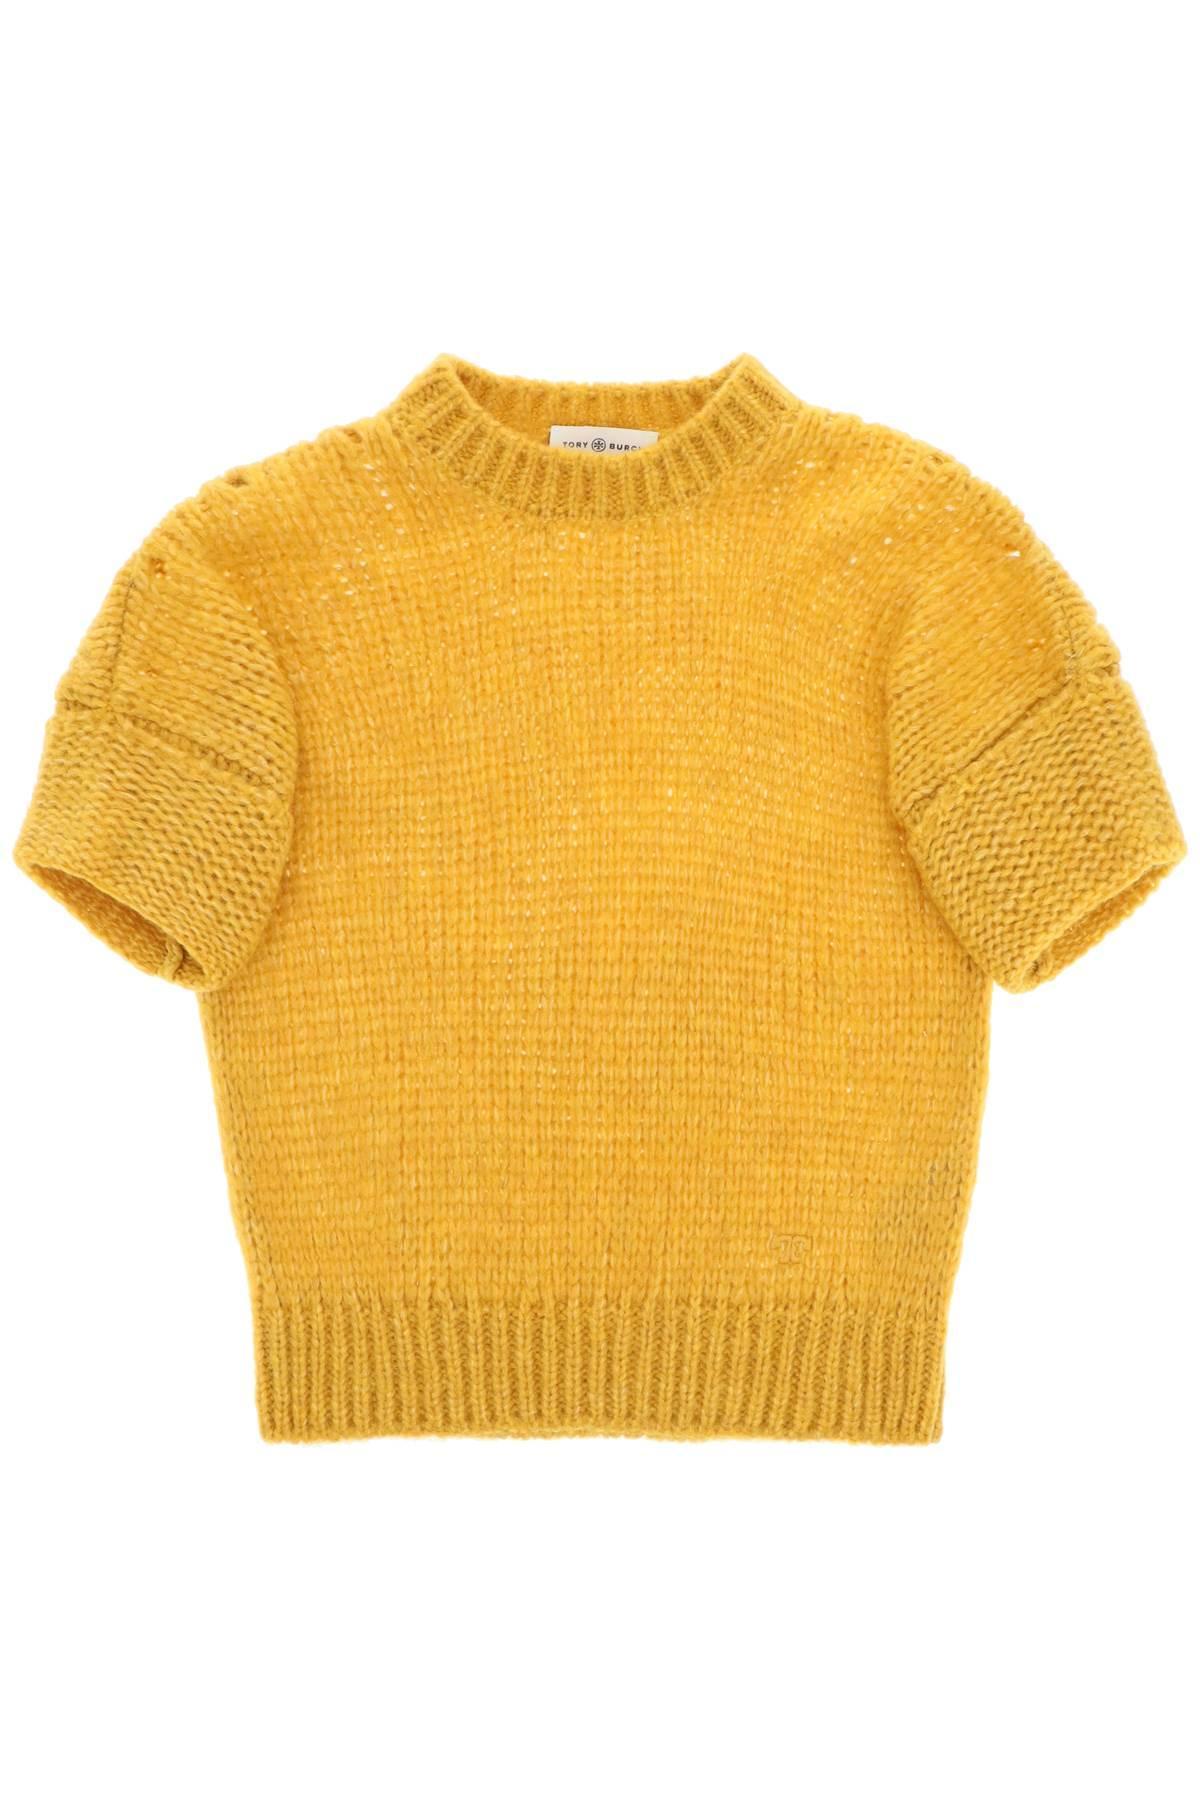 Tory Burch Alpaca And Wool Sweater in Yellow | Lyst